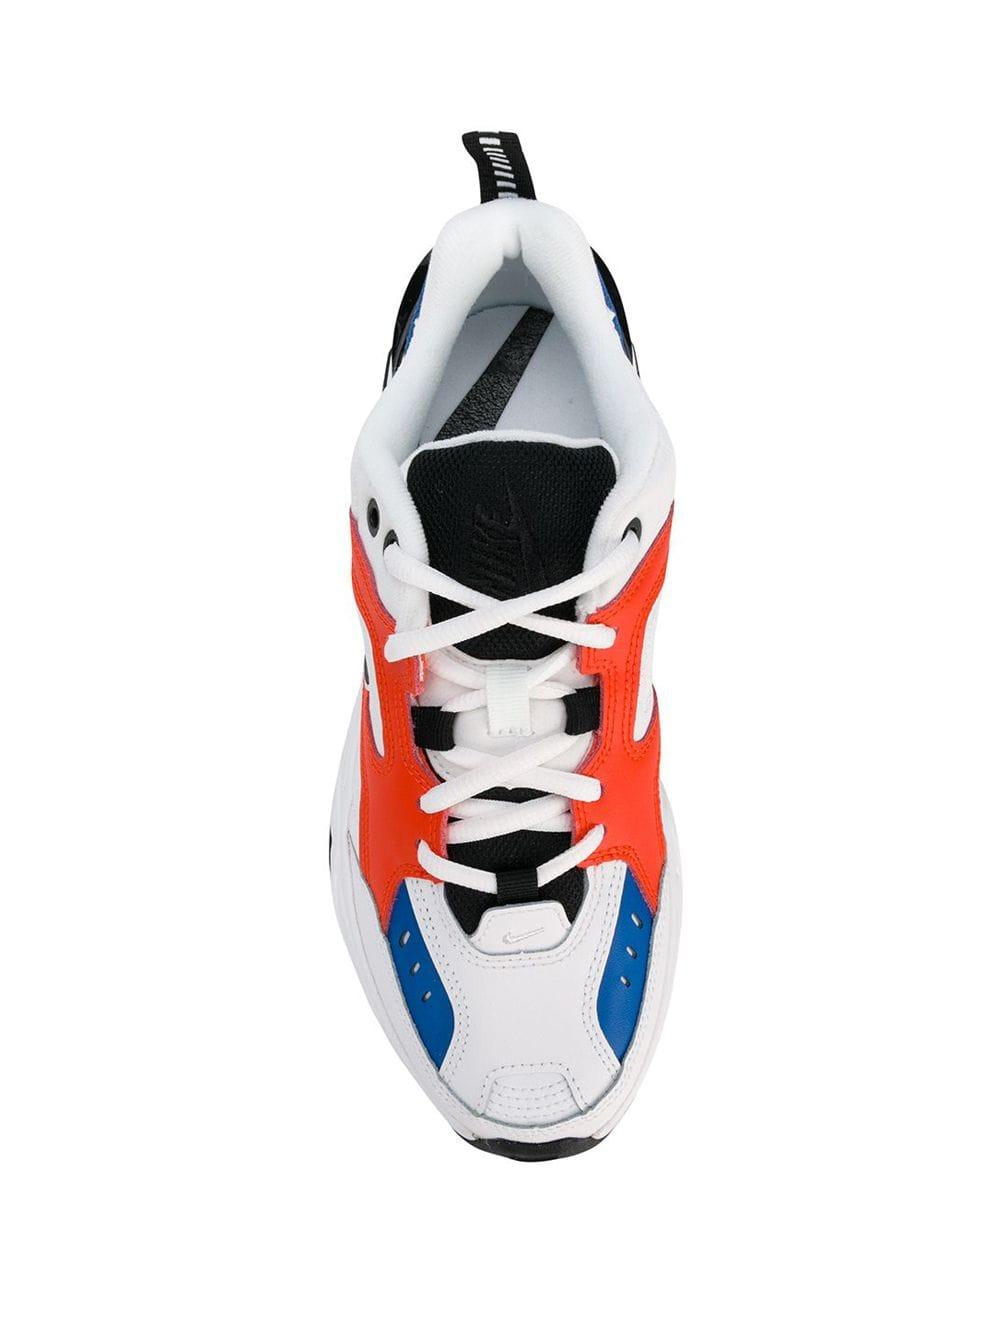 Nike レザー M2k Tekno White Black Orange | Lyst